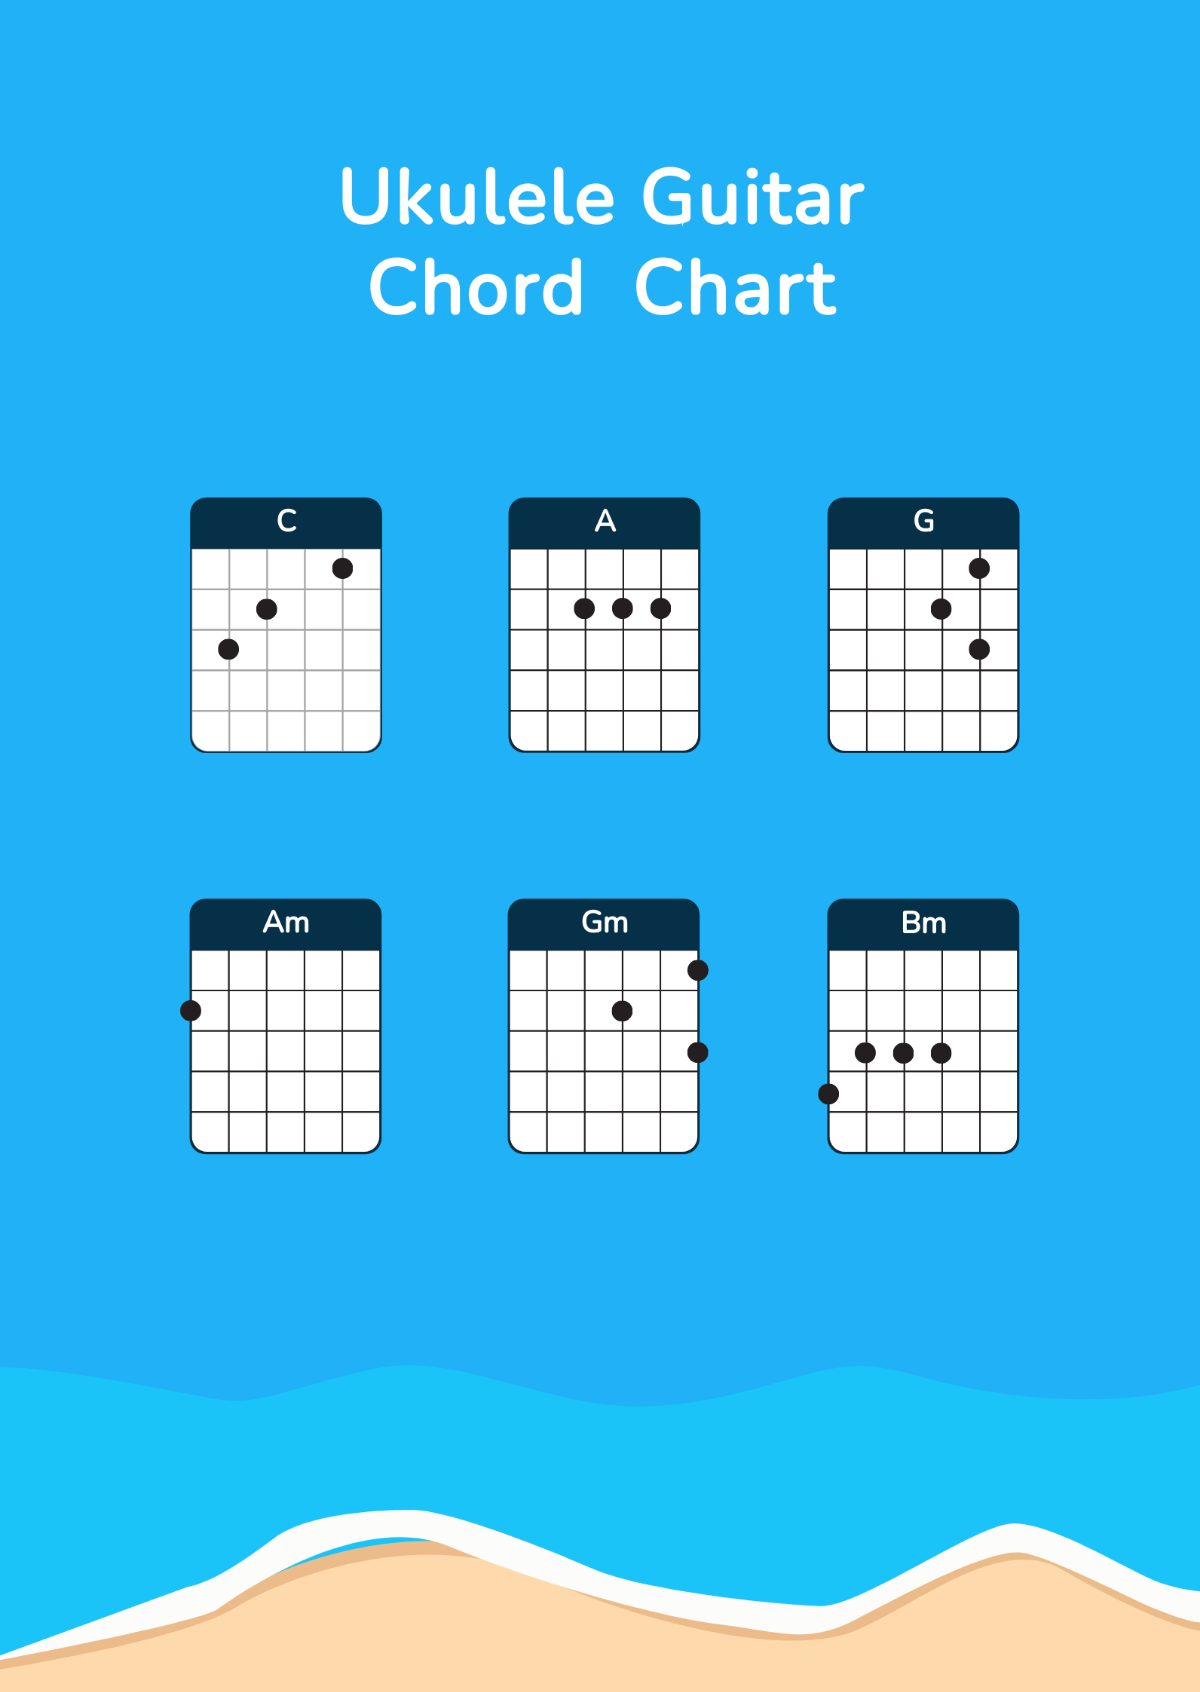 Ukulele Guitar Chord Chart Template